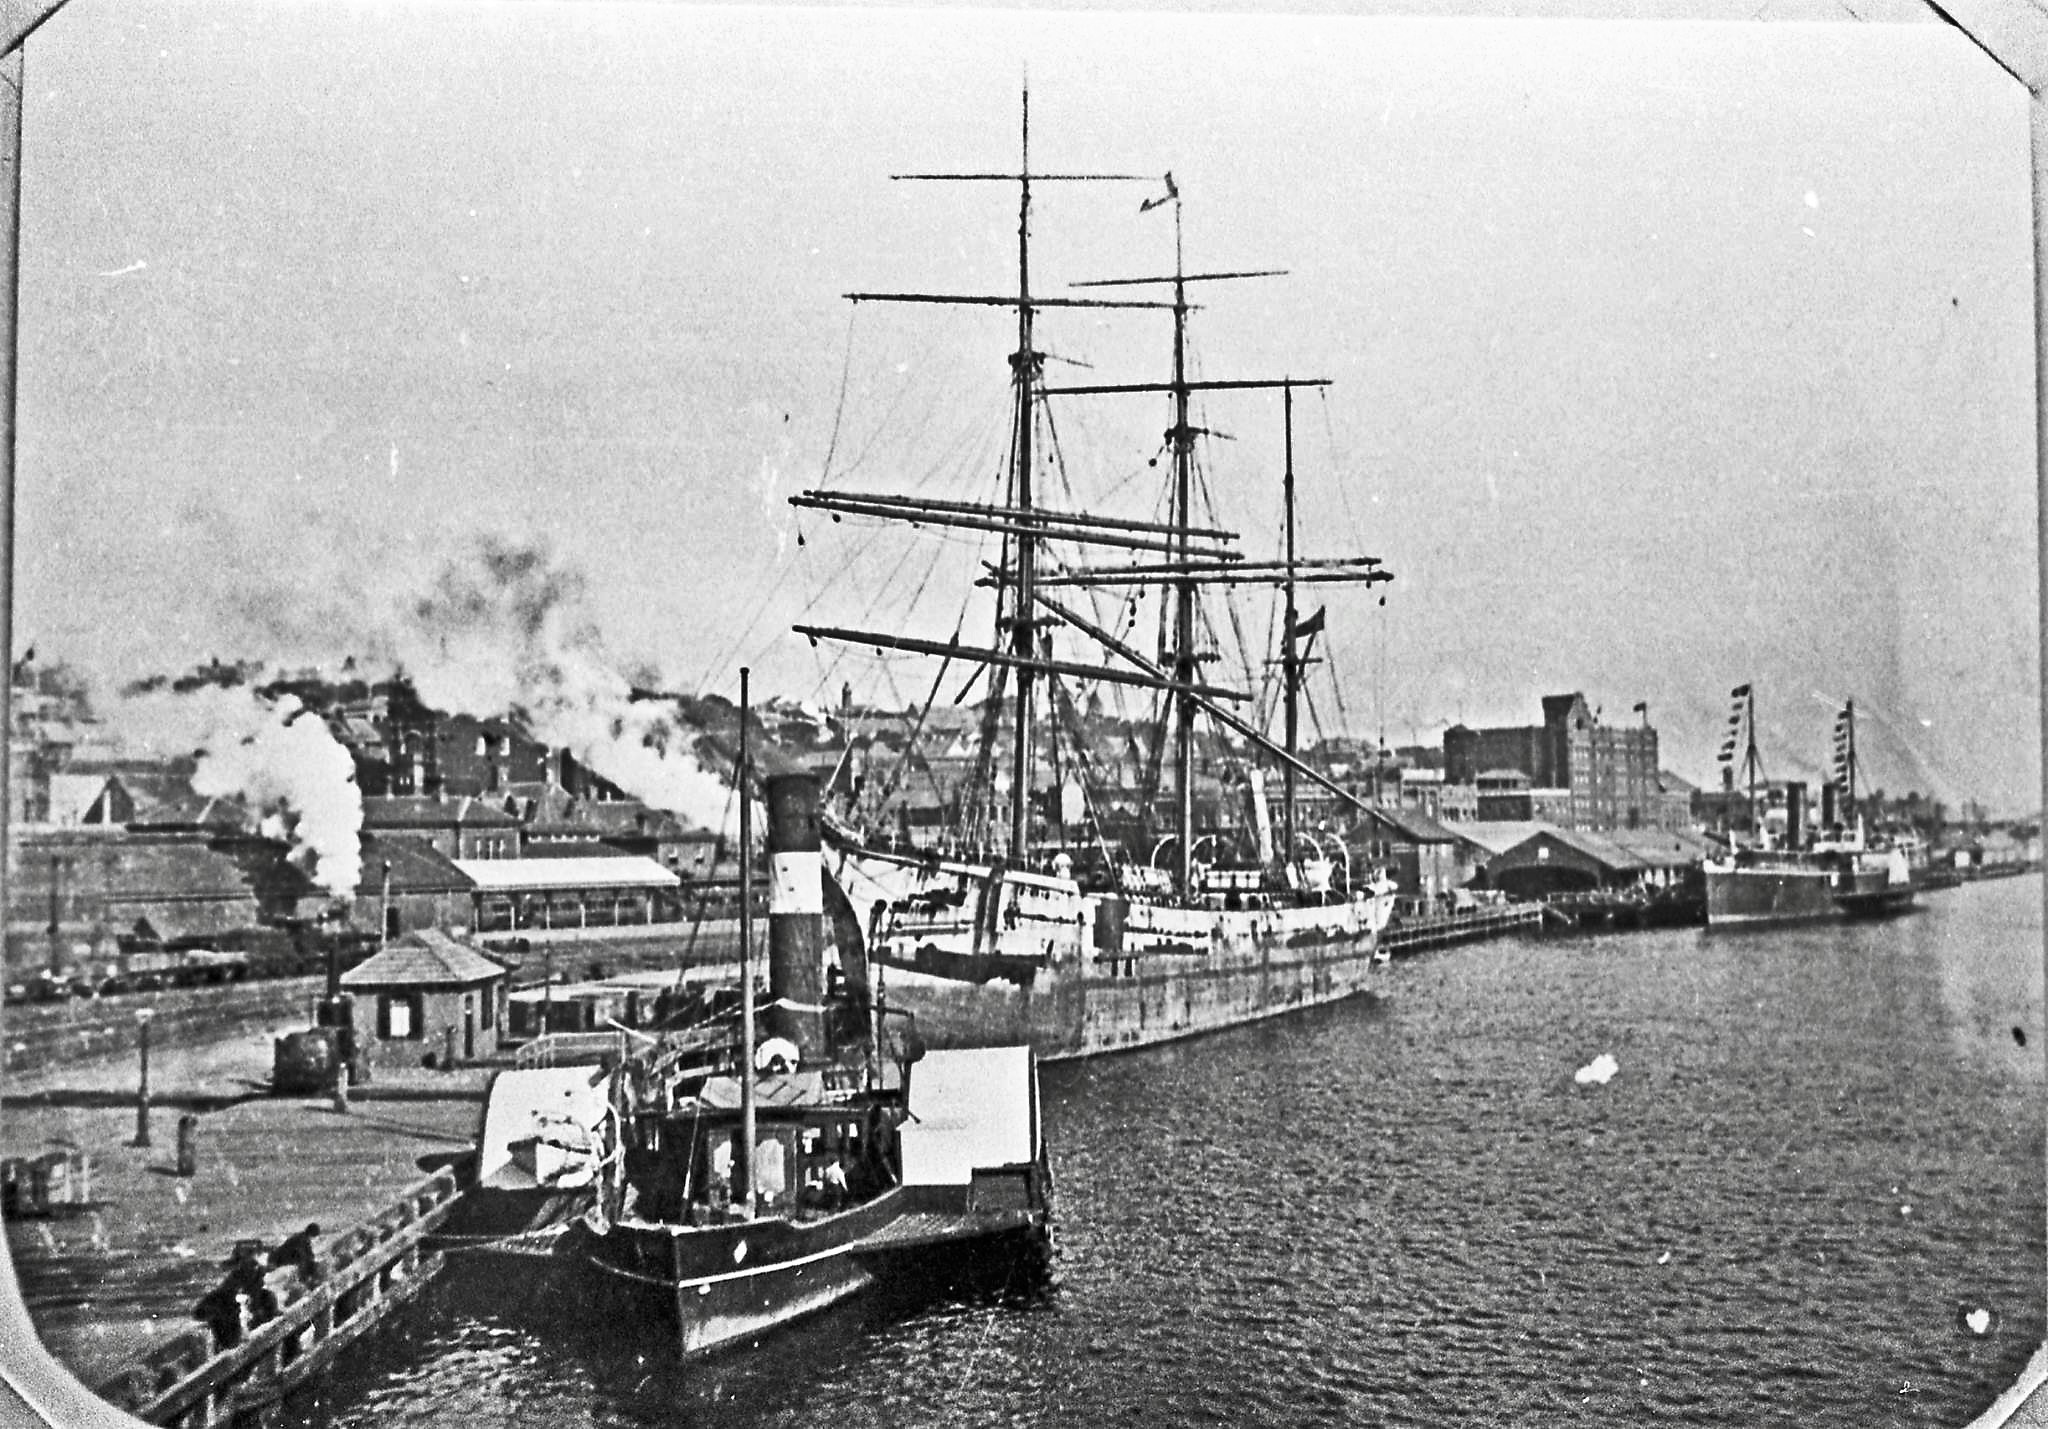 Former Sydney ferry COMMODORE as a tug in Newcastle